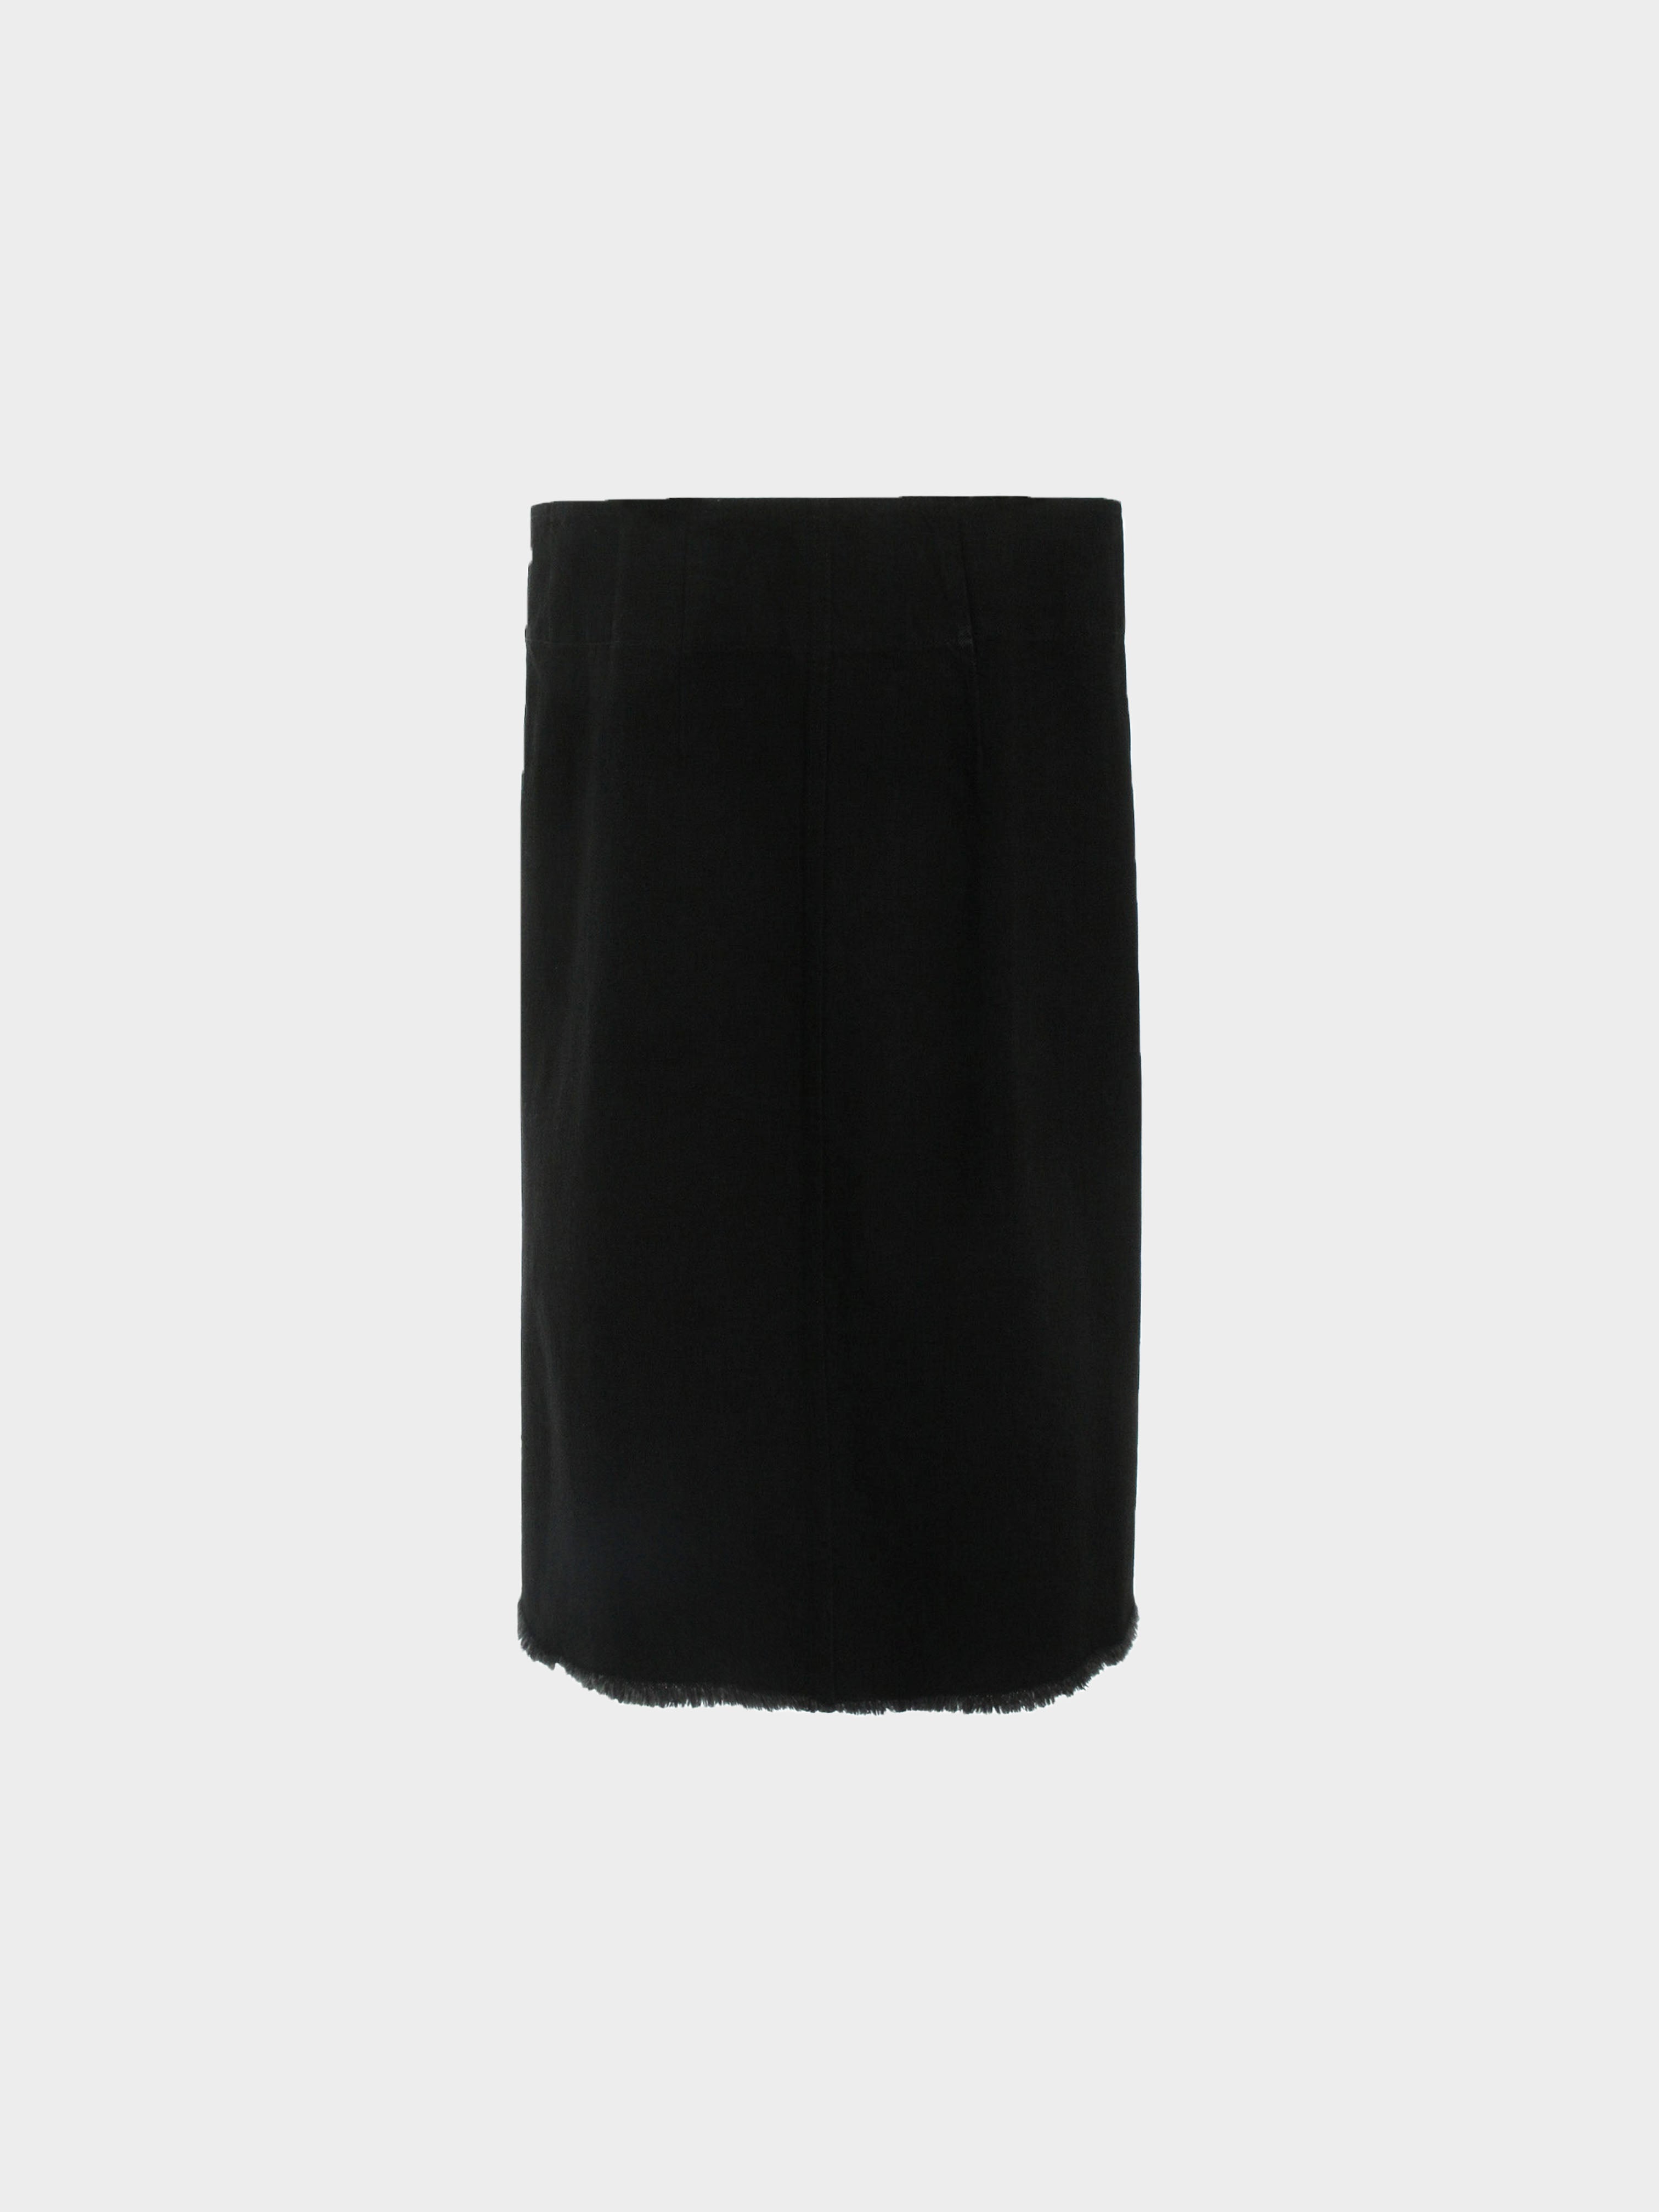 Céline by Phoebe Philo 2010s Knee-Length Wrap Skirt